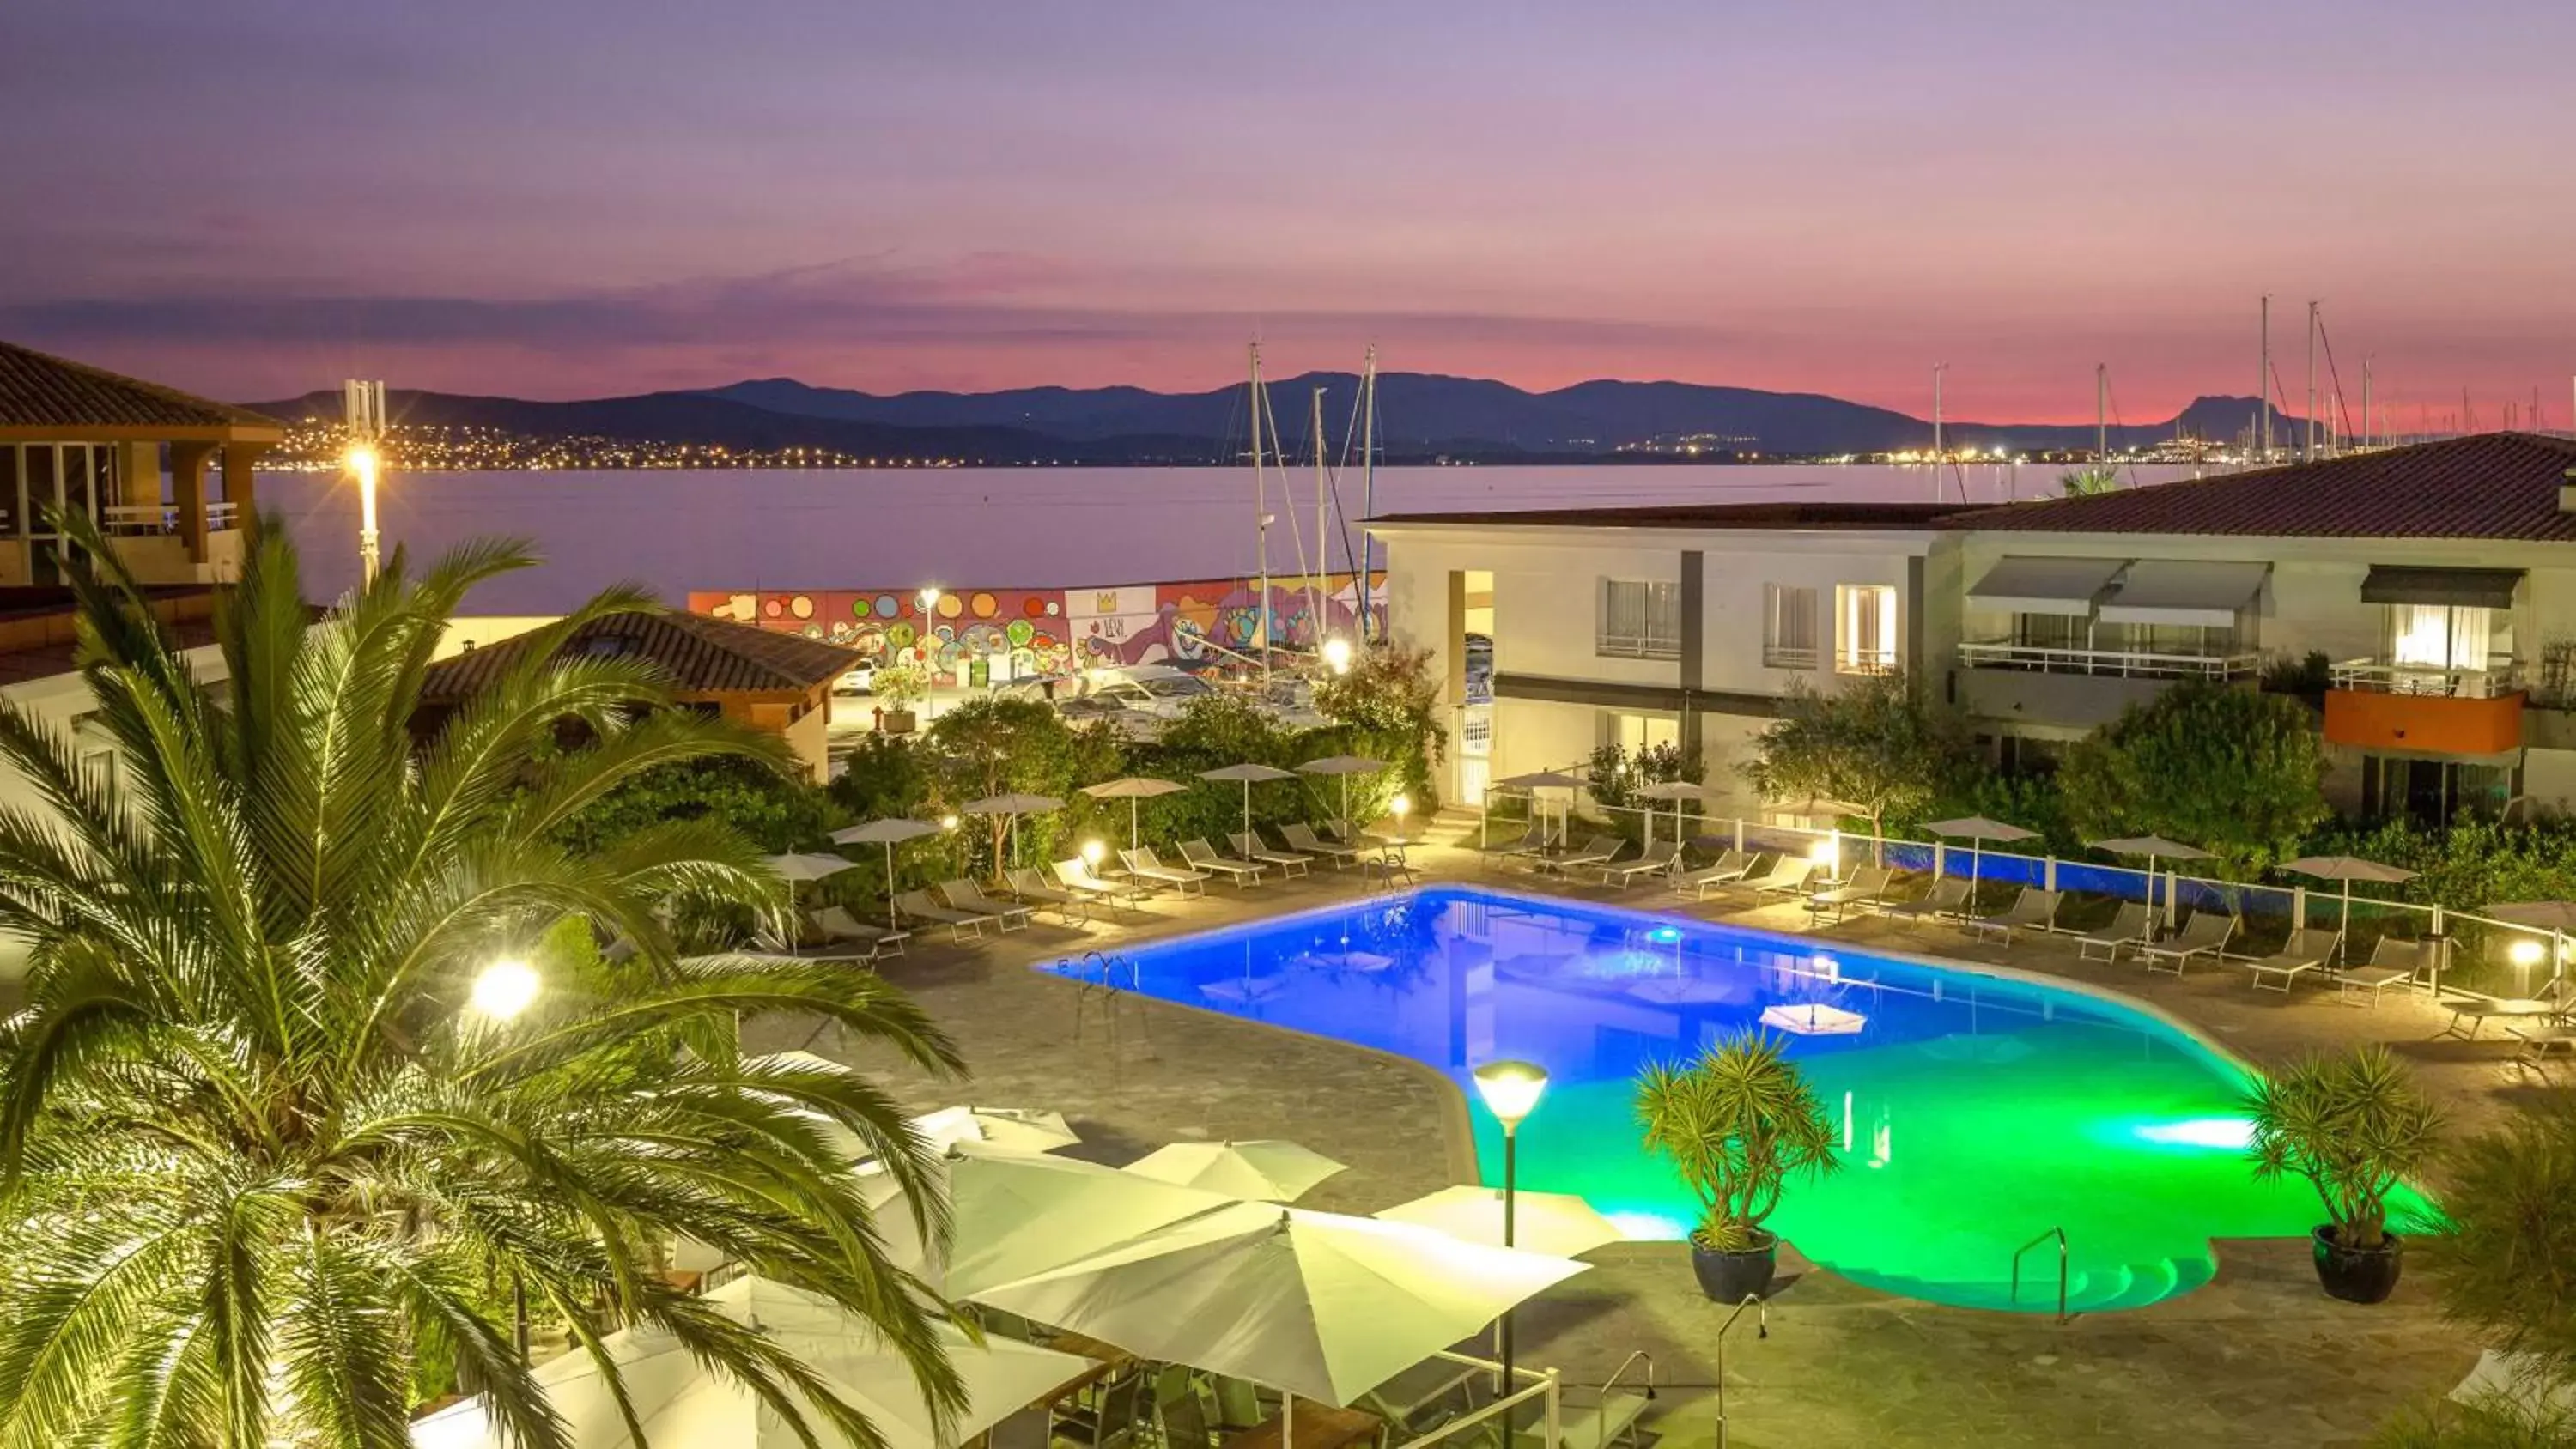 On site, Pool View in Best Western Plus La Marina